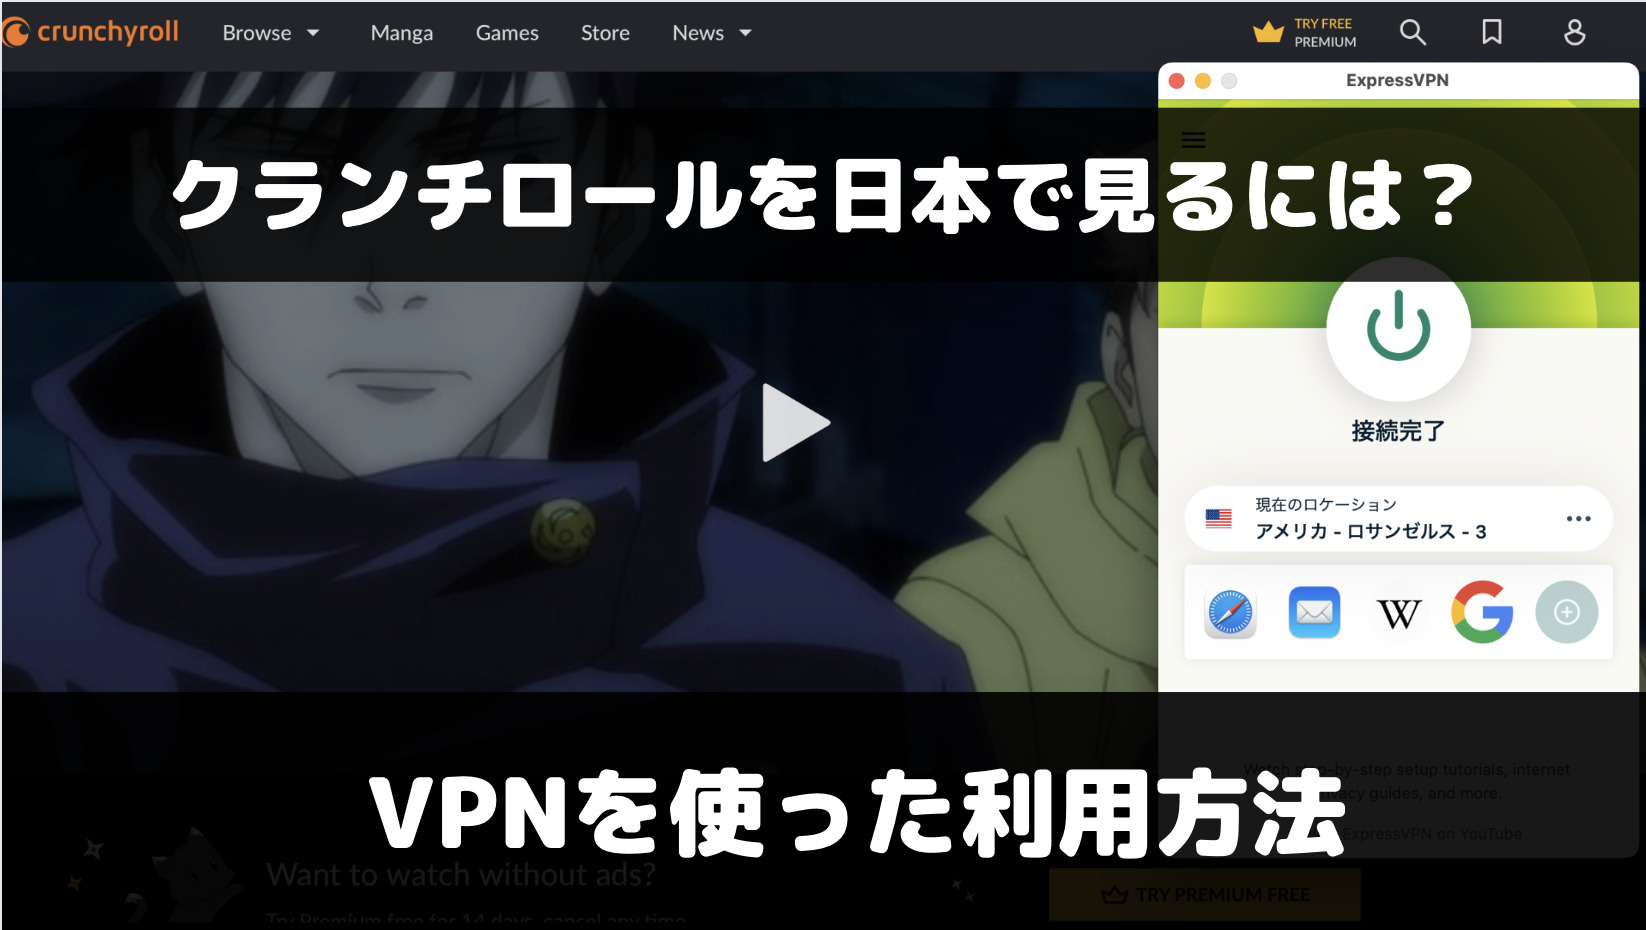 Crunchyroll（クランチロール）を日本で見るには？VPNを使った視聴方法